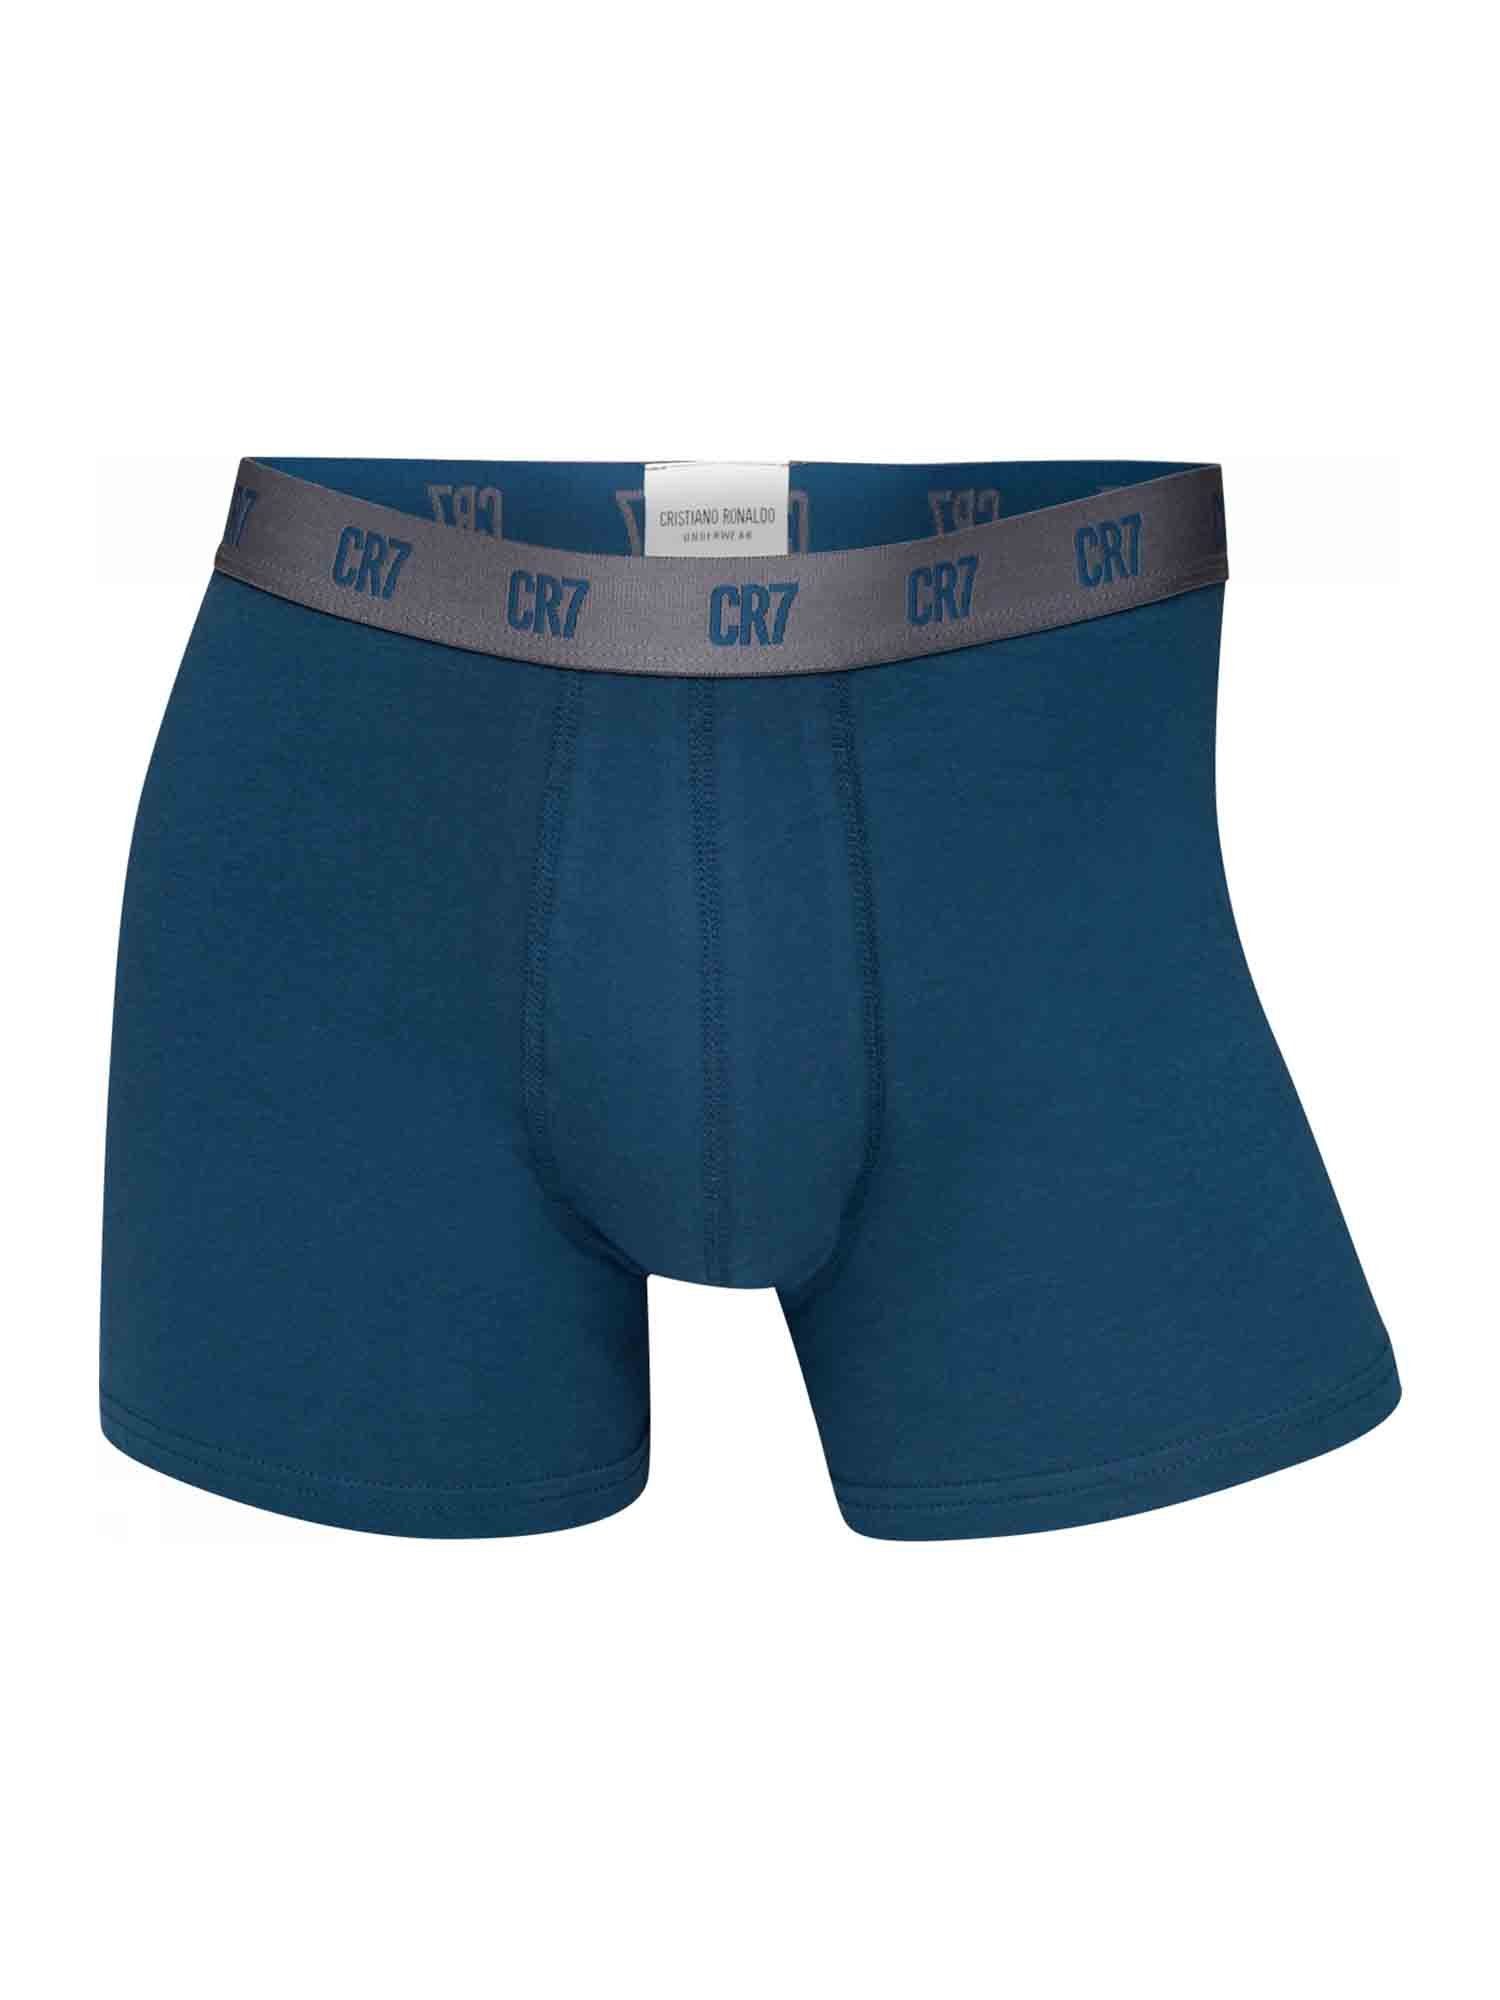 CR7 Retro Pants Retro Boxershorts Multipack Pants Multi Trunks (3-St) Männer 23 Herren